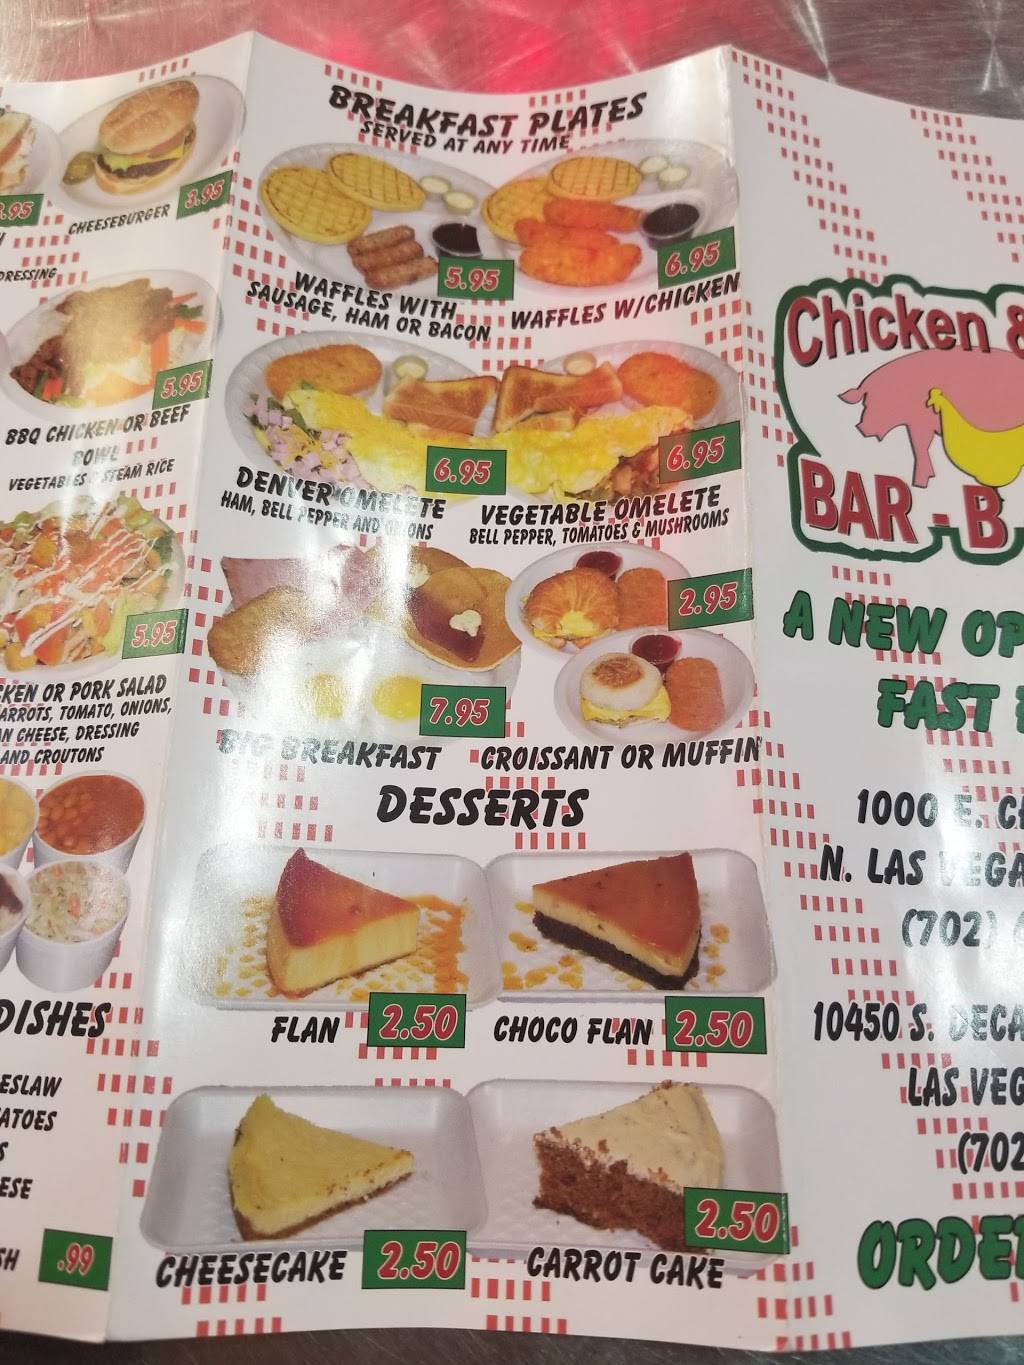 Chicken & Pig Bar-B-Que | North Las Vegas, NV 89030 | Phone: (702) 649-0772